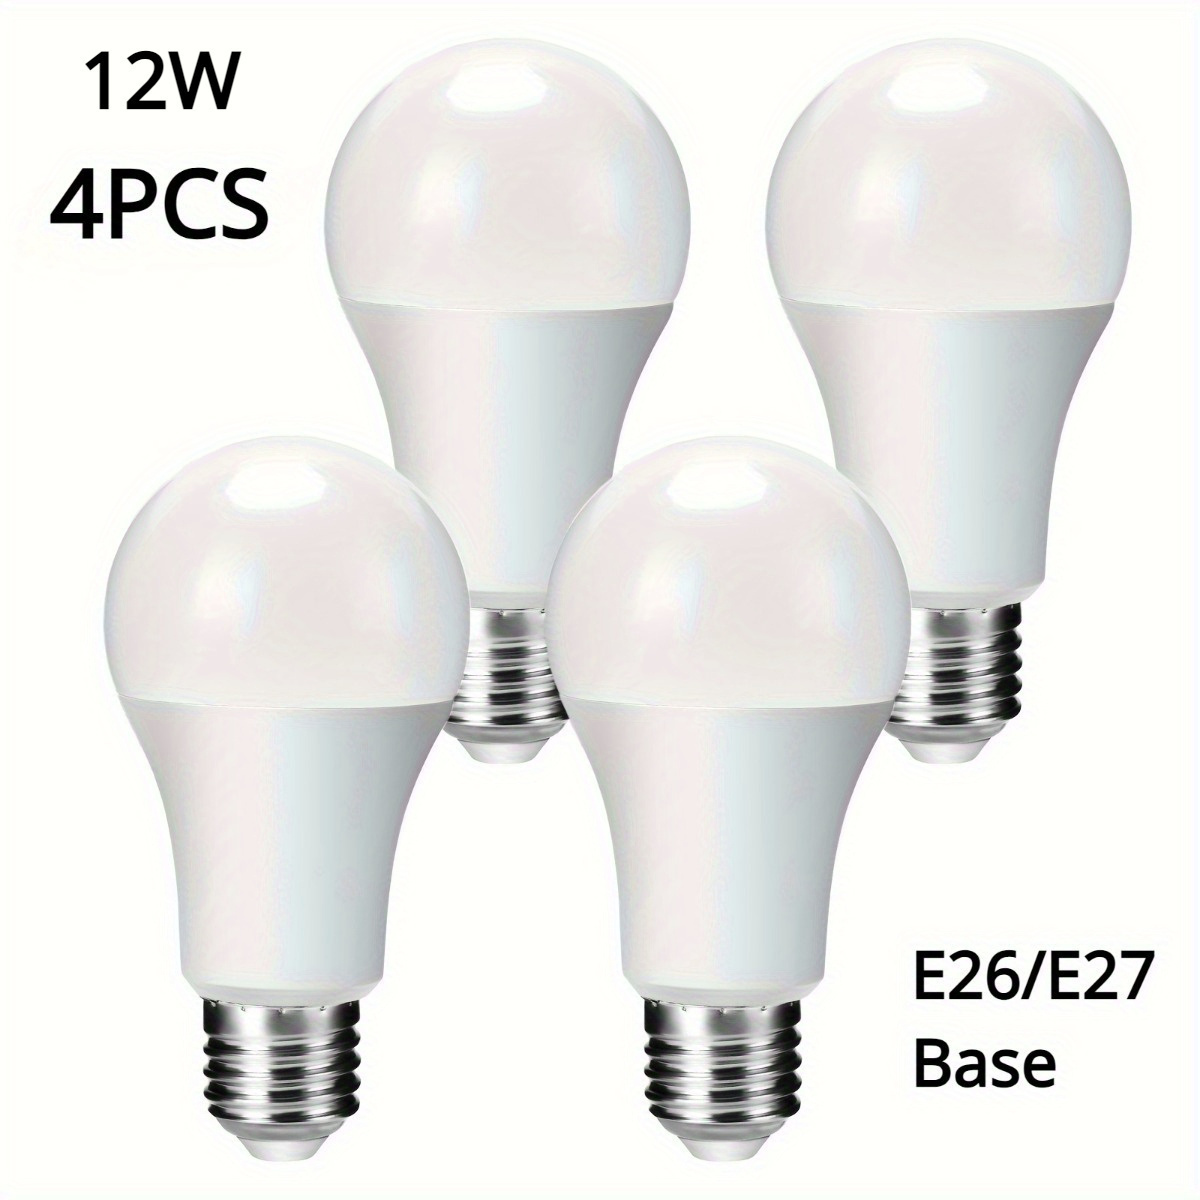 

2pcs/4pcs A19/a60 Led Light Bulbs, 12w E26/e27 Base 1100 Lumens Cri 90+ Daylight 6000k, Non-dimmable Light Bulbs For Home Office, Halloween, Christmas